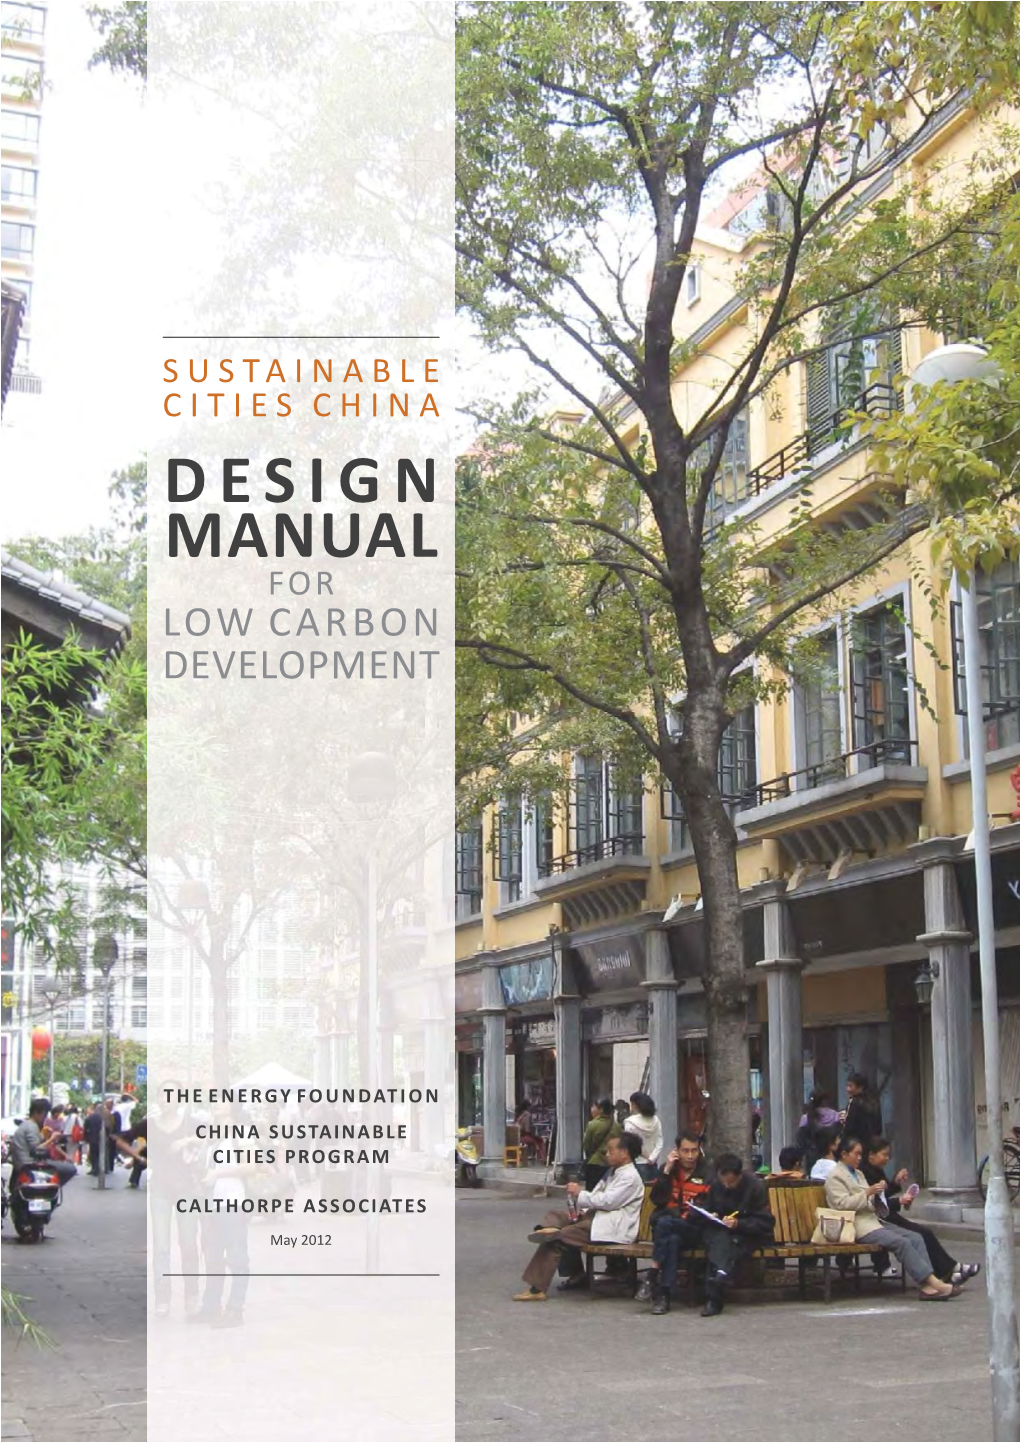 Design Manual for Low Carbon Development